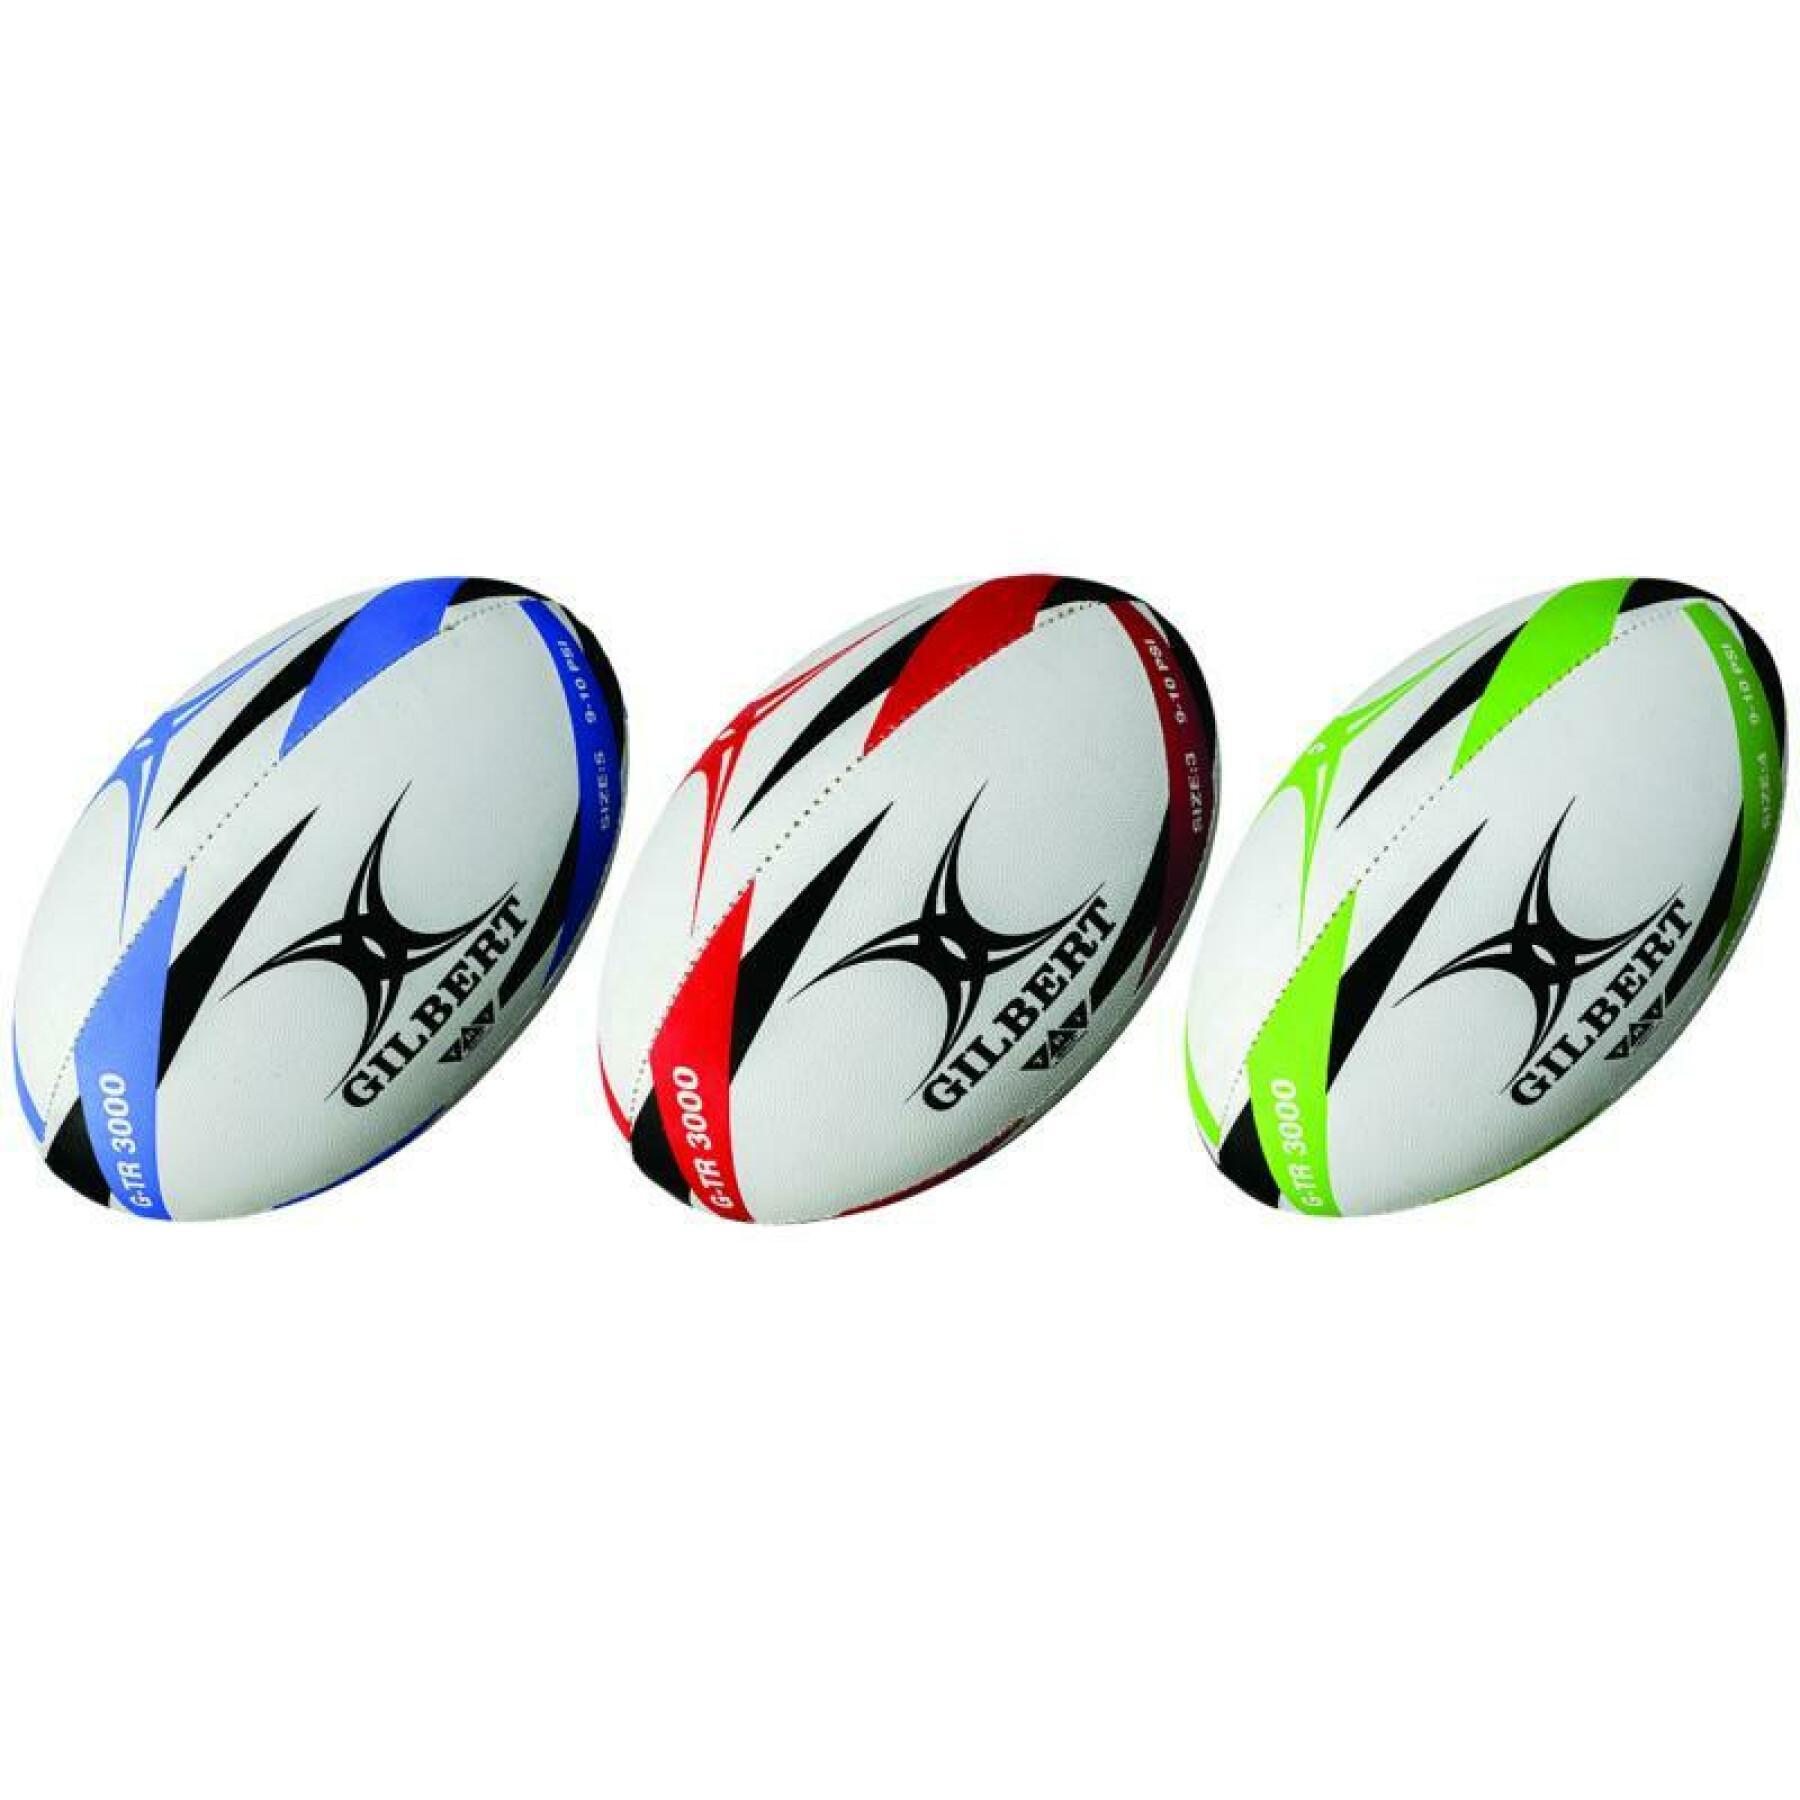 Pallone da rugby gilbert Tr3000